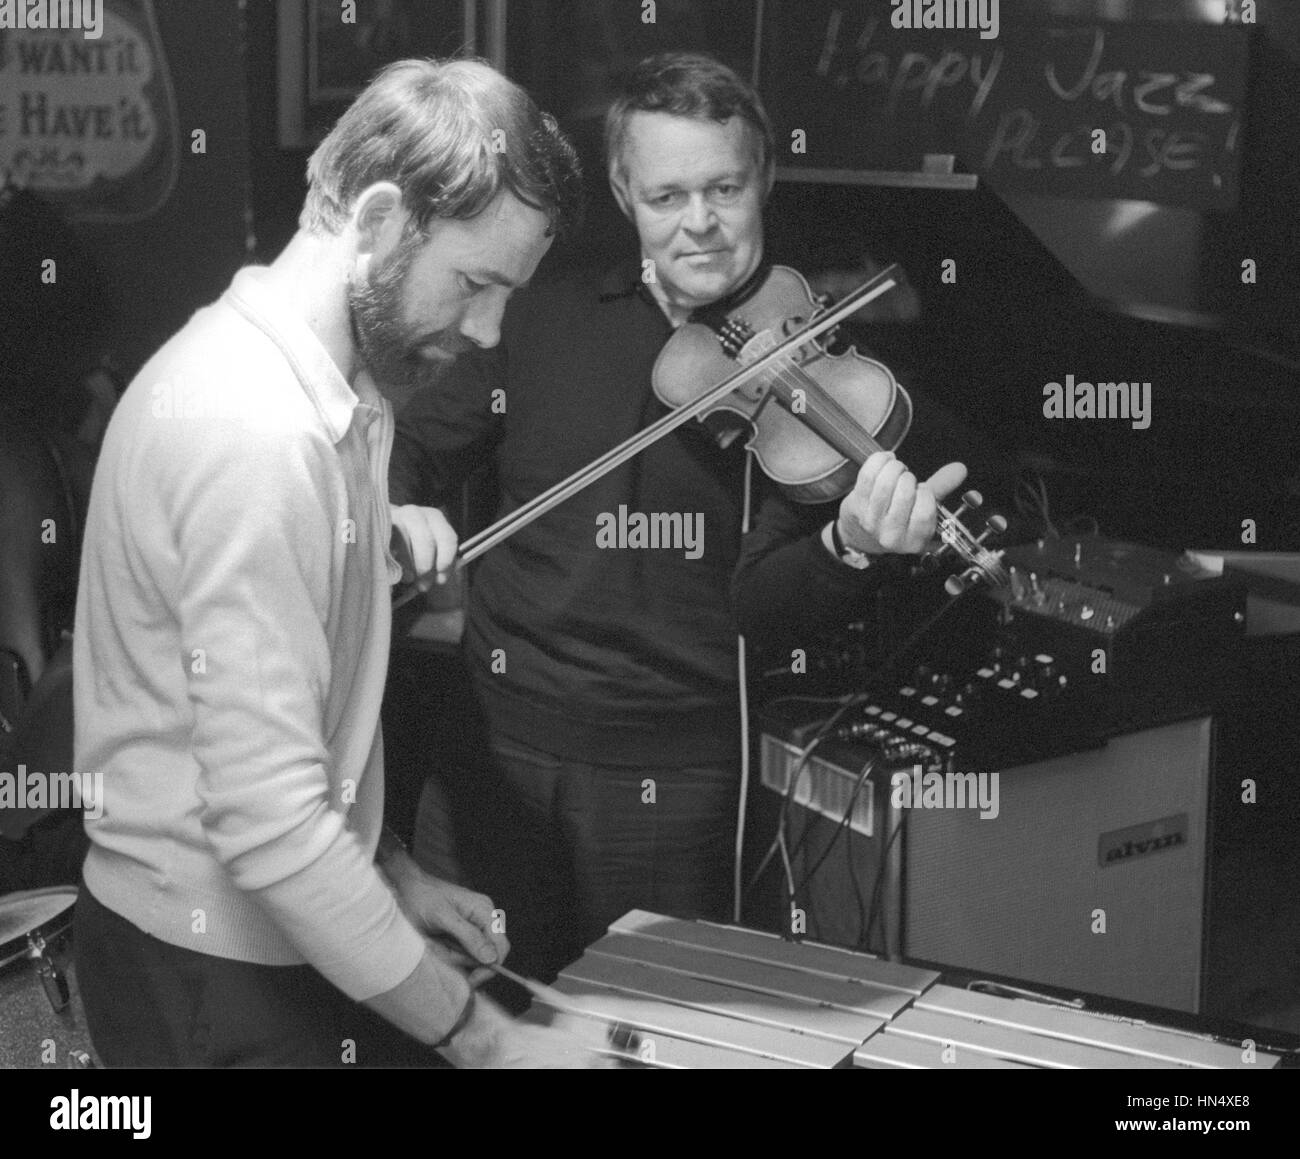 SVEND ASSMUSEN  Danish legendary violinist together with Swedish Lars Erstrand vibraphonist on stage Stock Photo